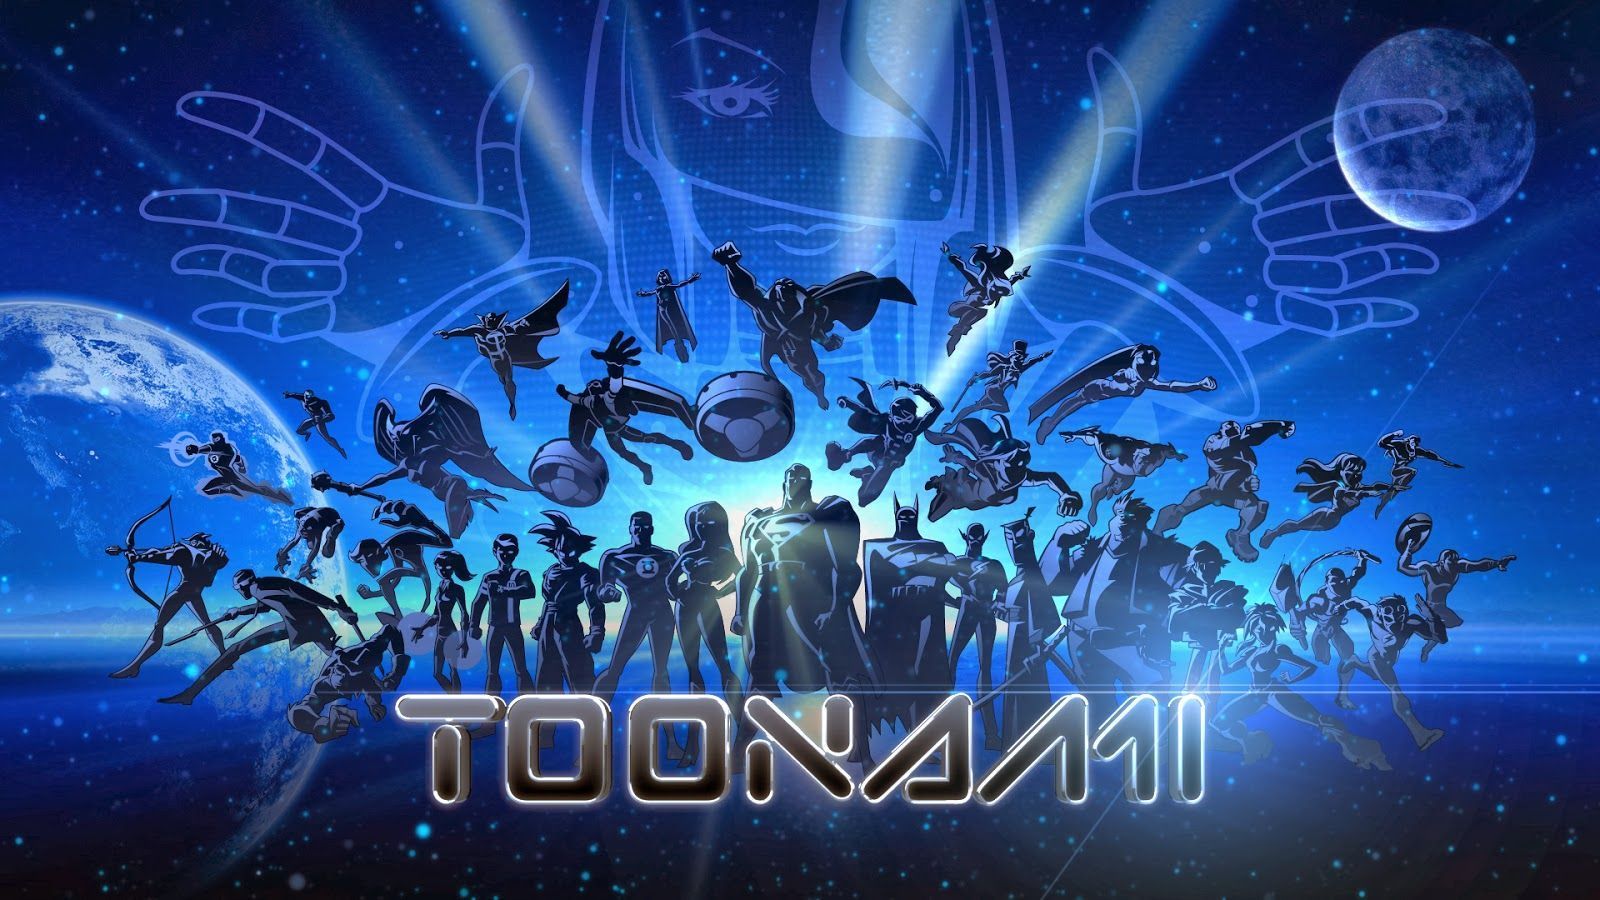 Toonami Wallpaper